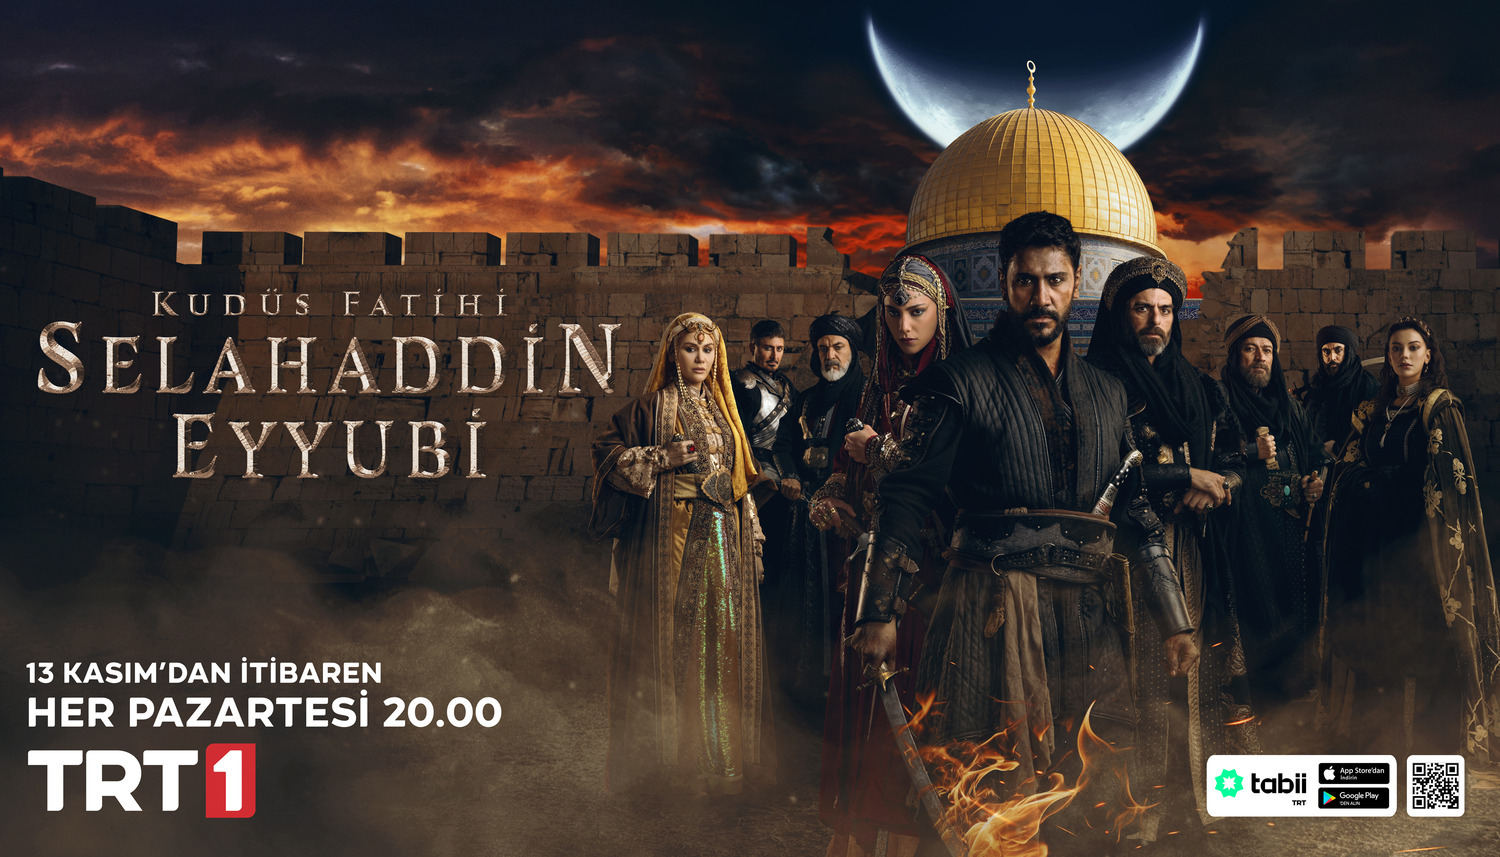 Extra Large TV Poster Image for Kudüs Fatihi: Selahaddin Eyyubi (#2 of 4)